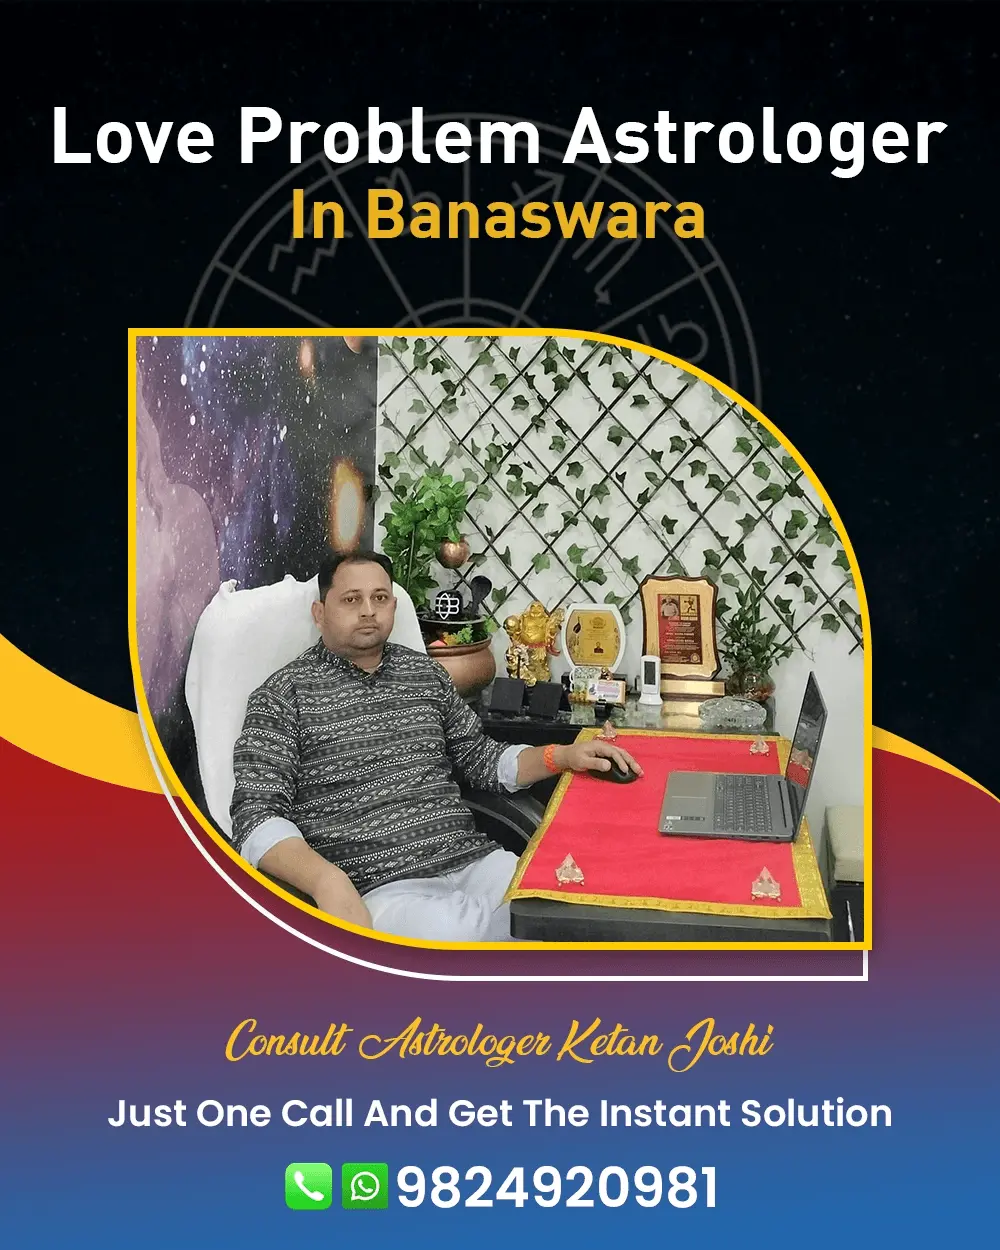 Love Problem Astrologer In Banaswara